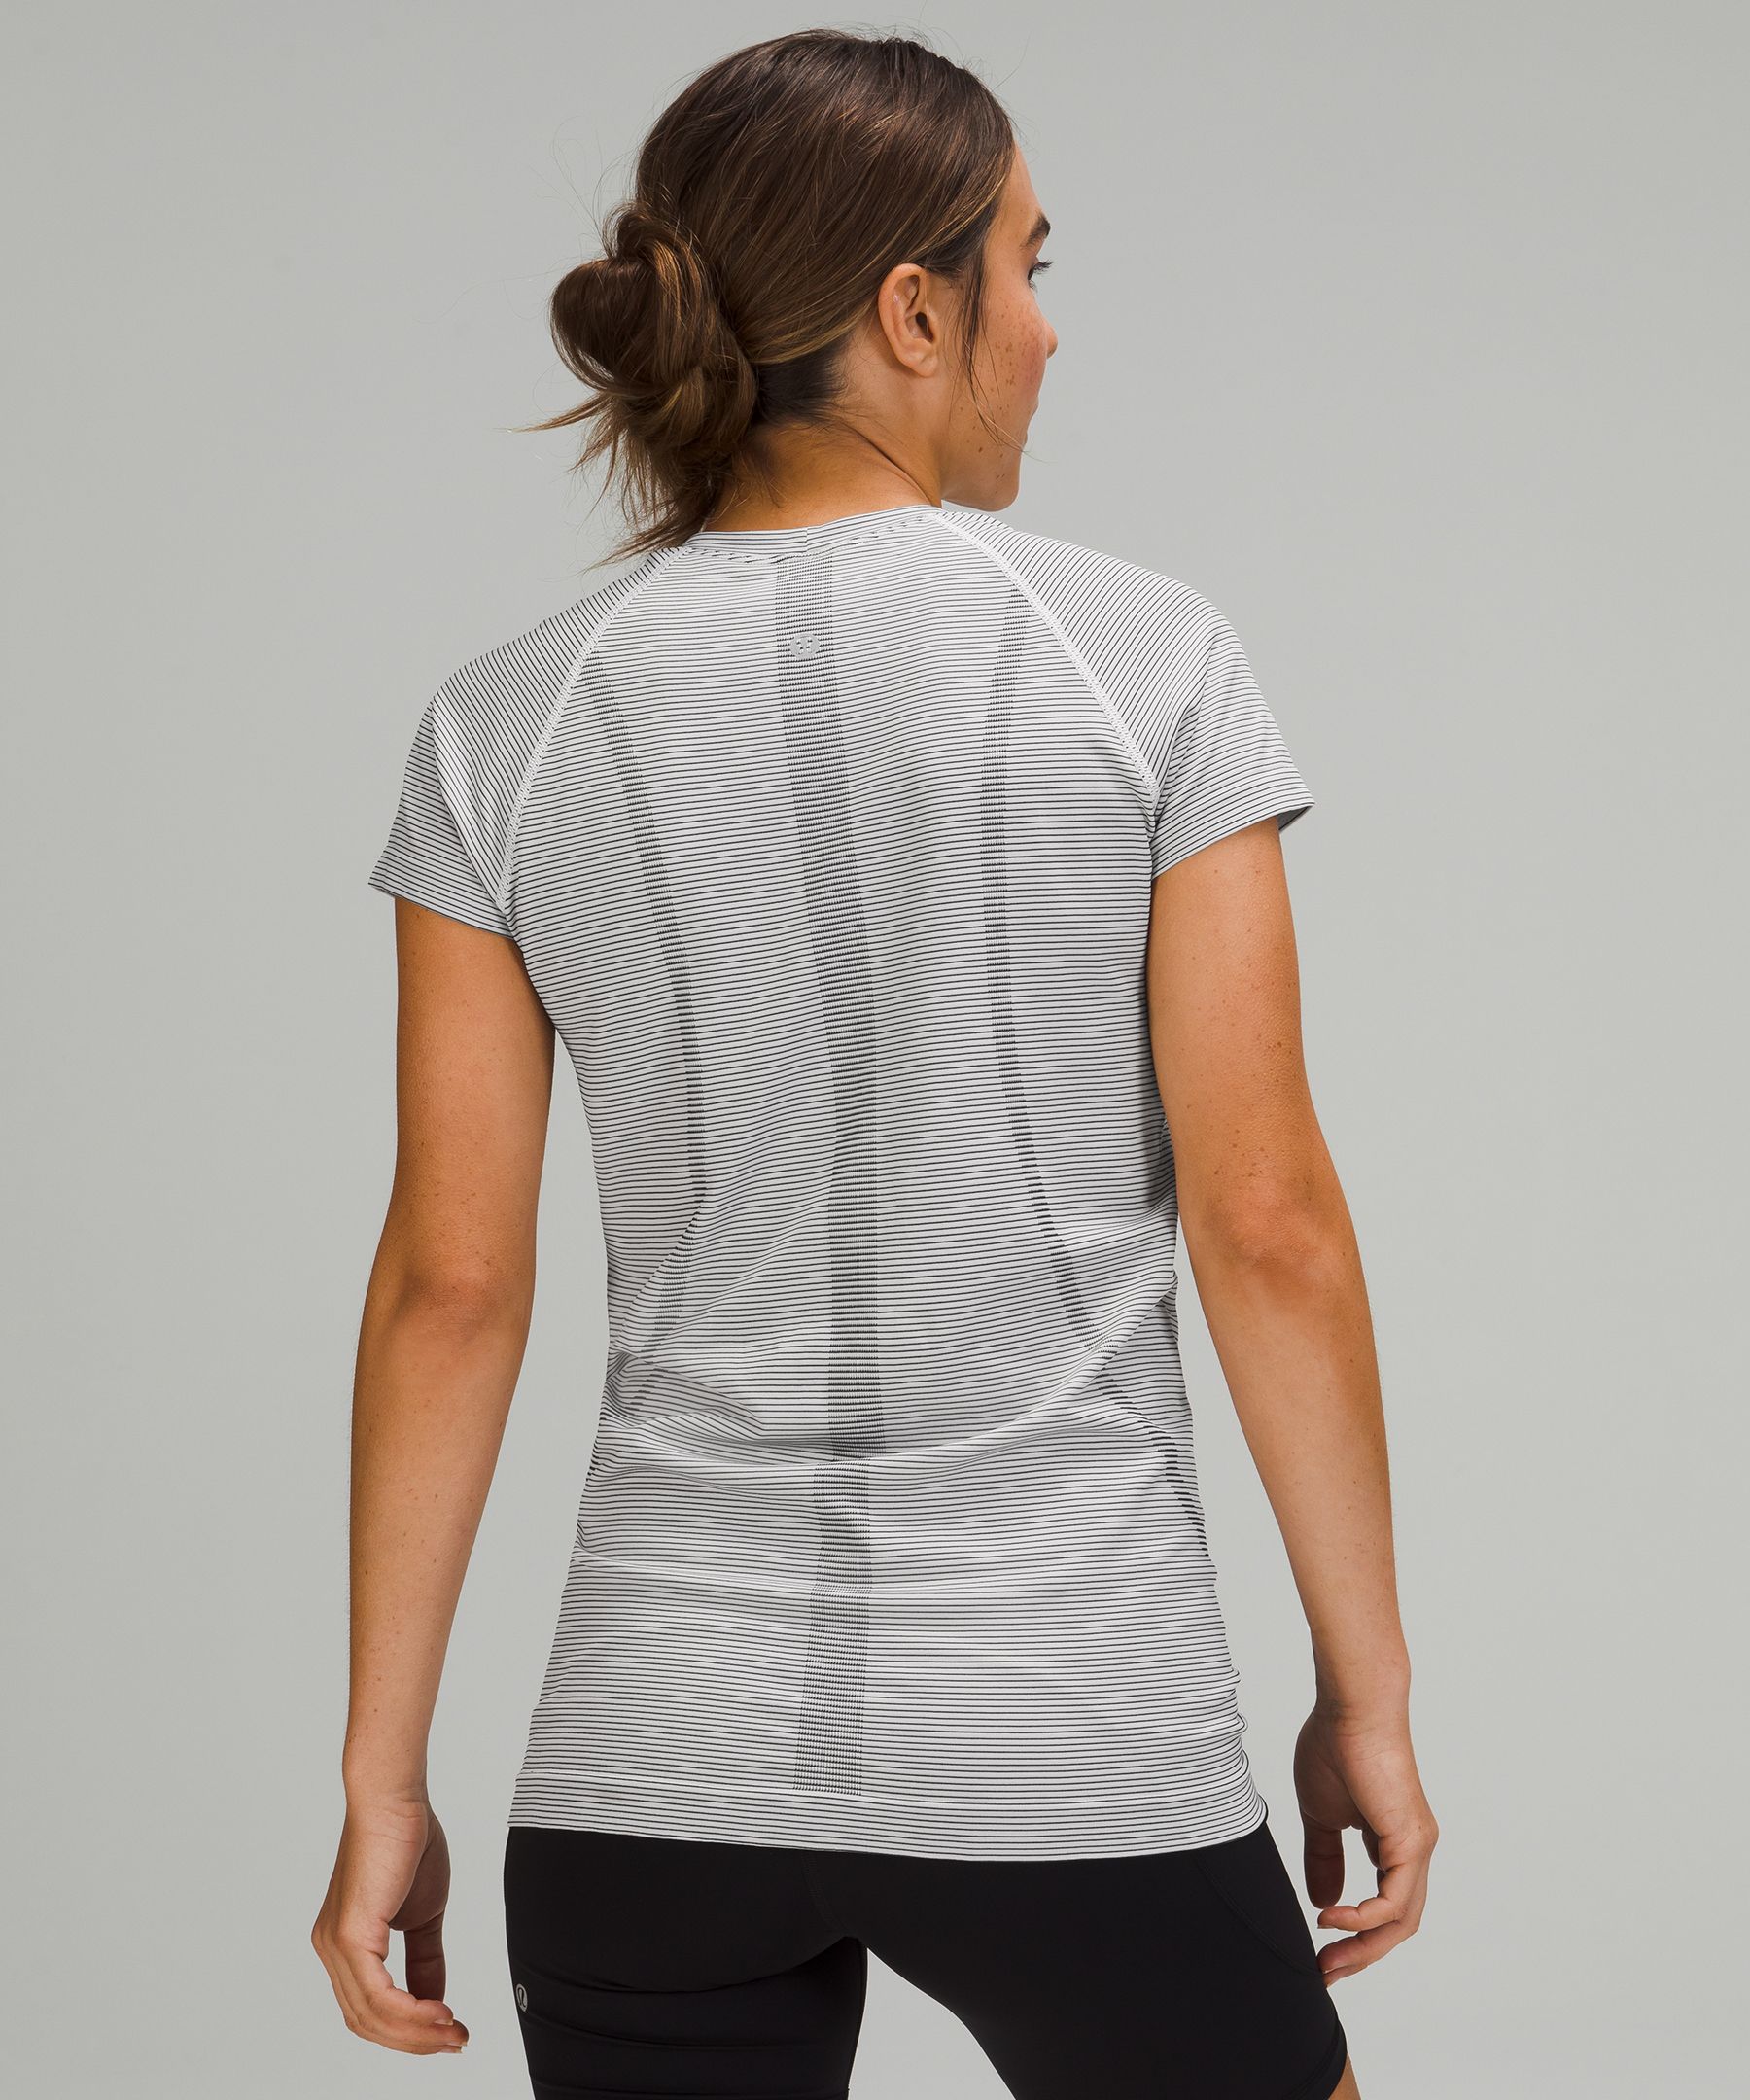 Lululemon Swiftly Tech Short Sleeve Shirt 2.0 - 117125207